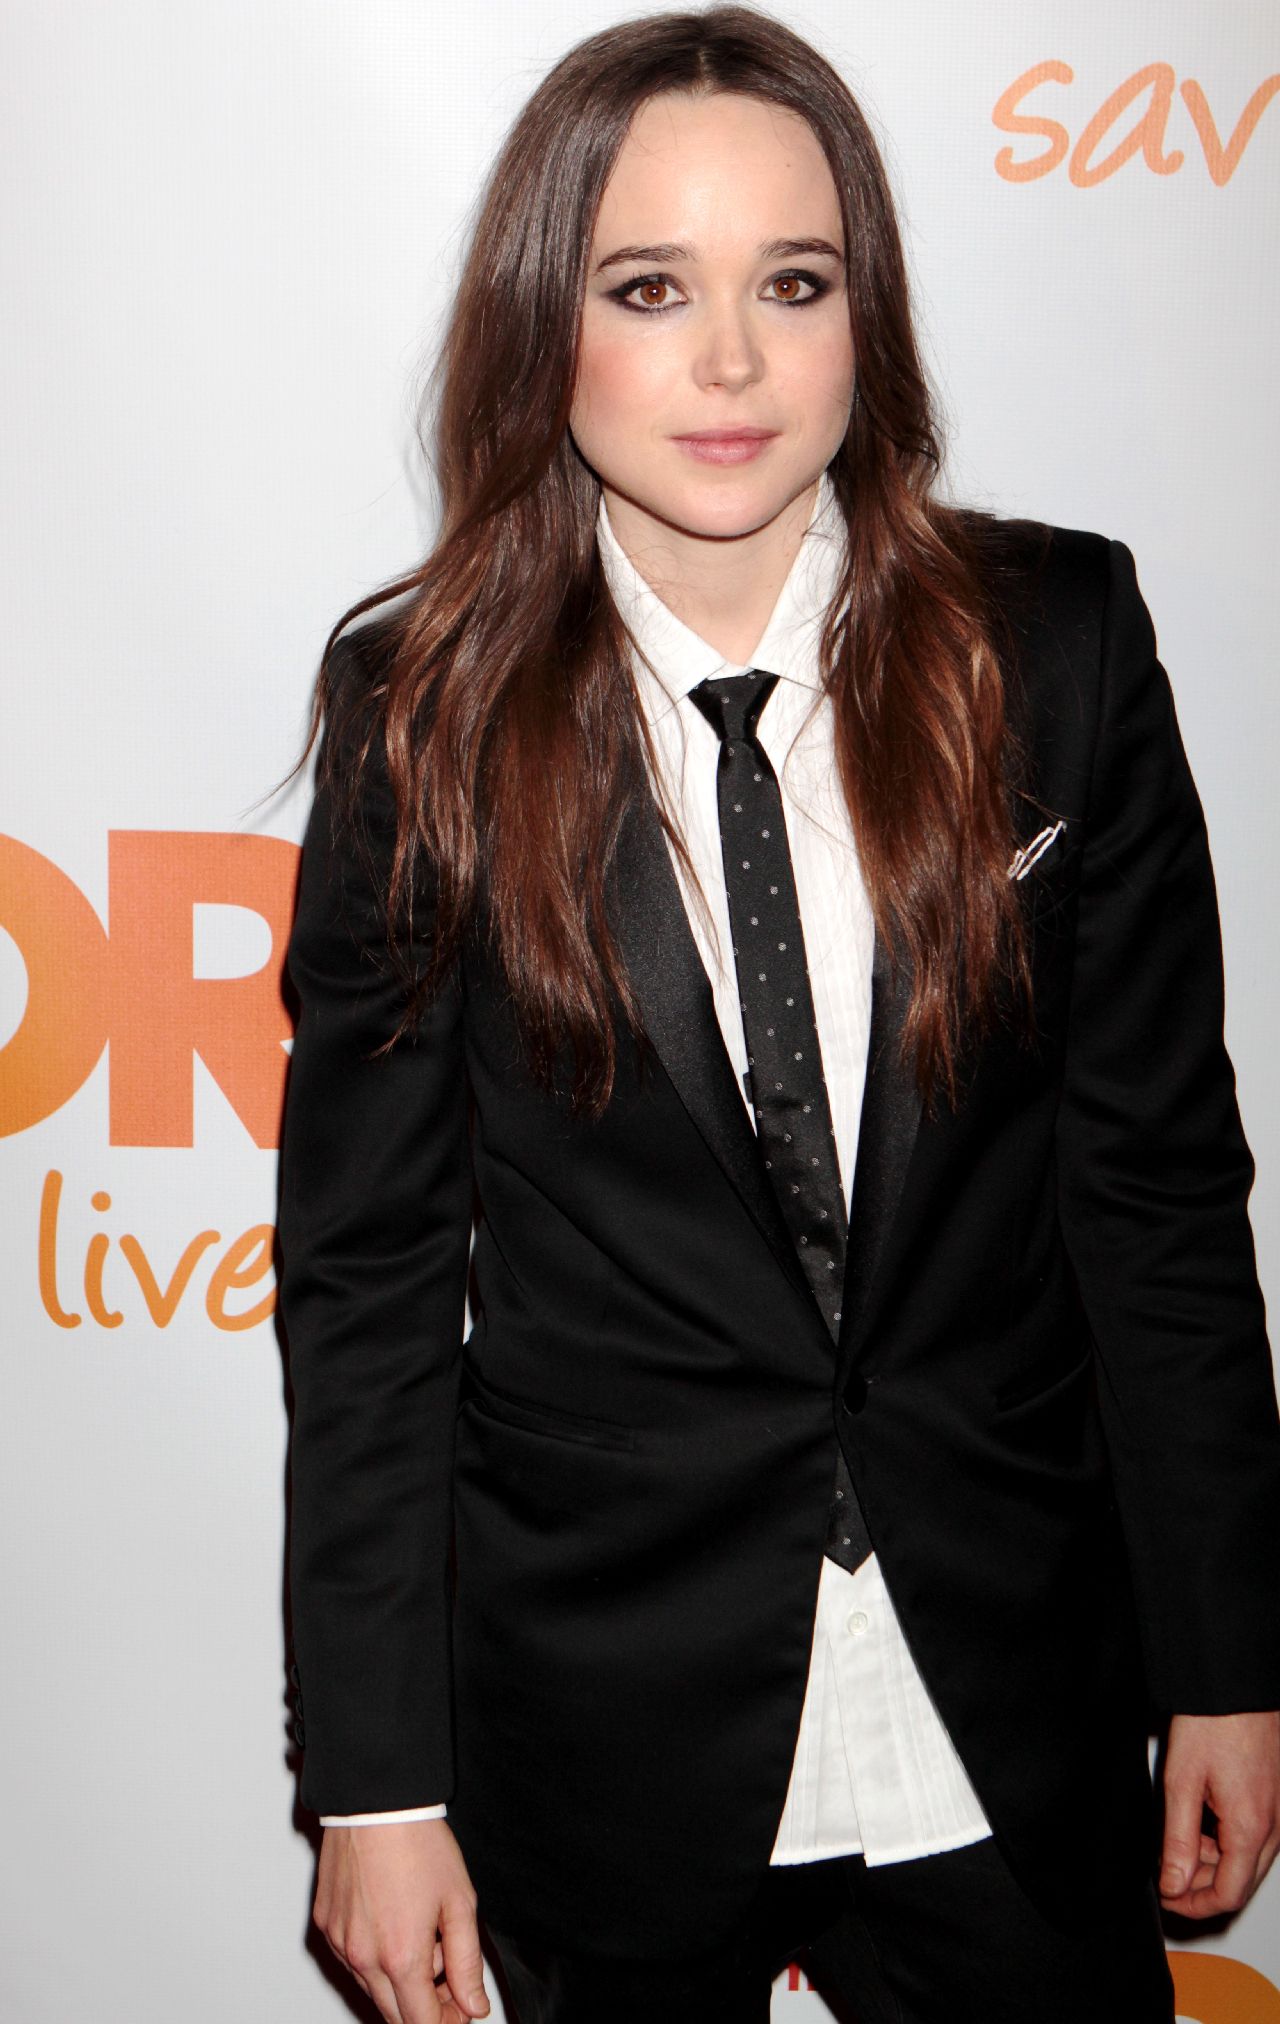 Ellen Page (28) - February 21, 1987